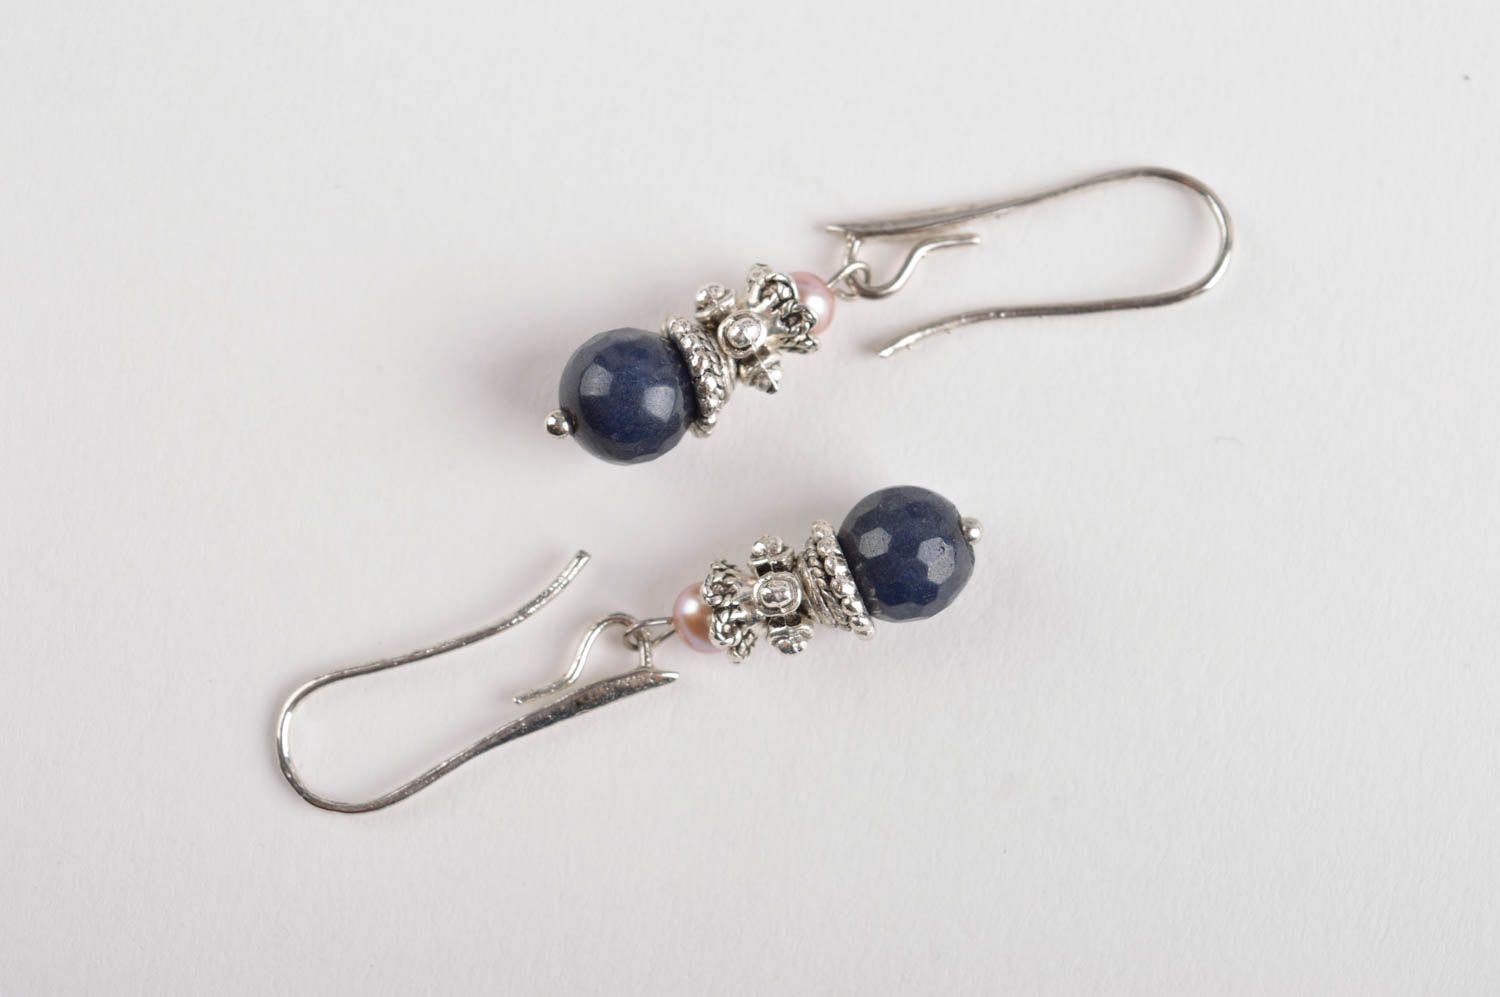 Handmade jewelry stone earrings dangling earrings women accessories gift for her photo 4